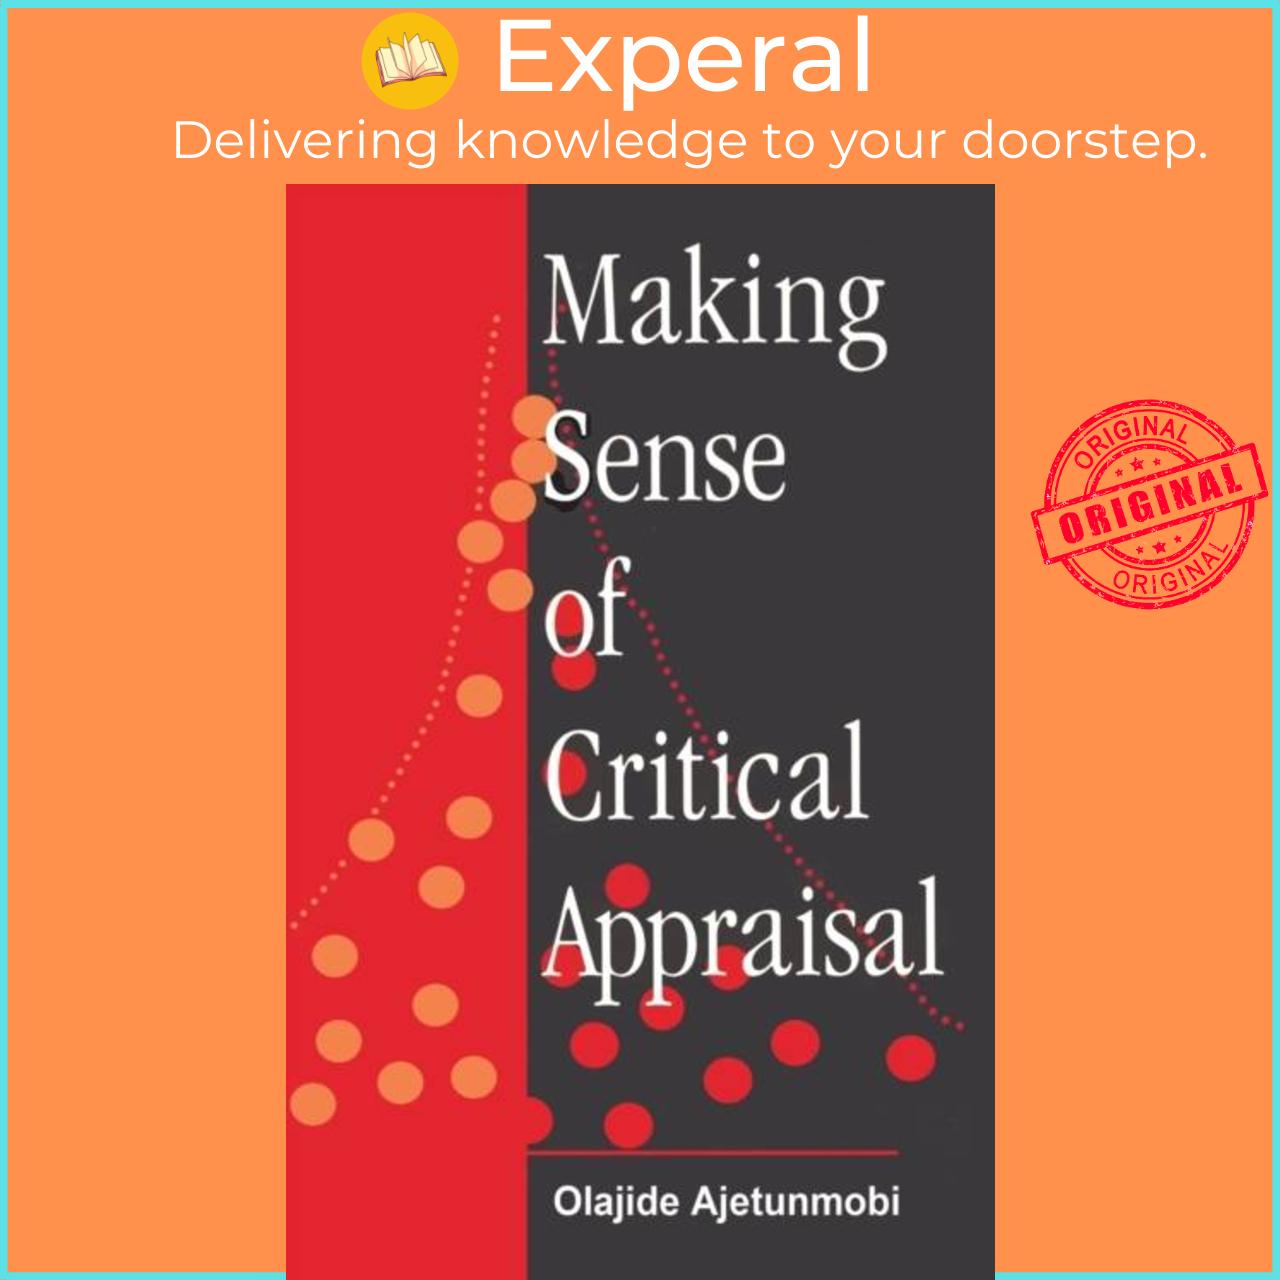 Hình ảnh Sách - Making Sense of Critical Appraisal by Olajide Ajetunmobi (UK edition, paperback)